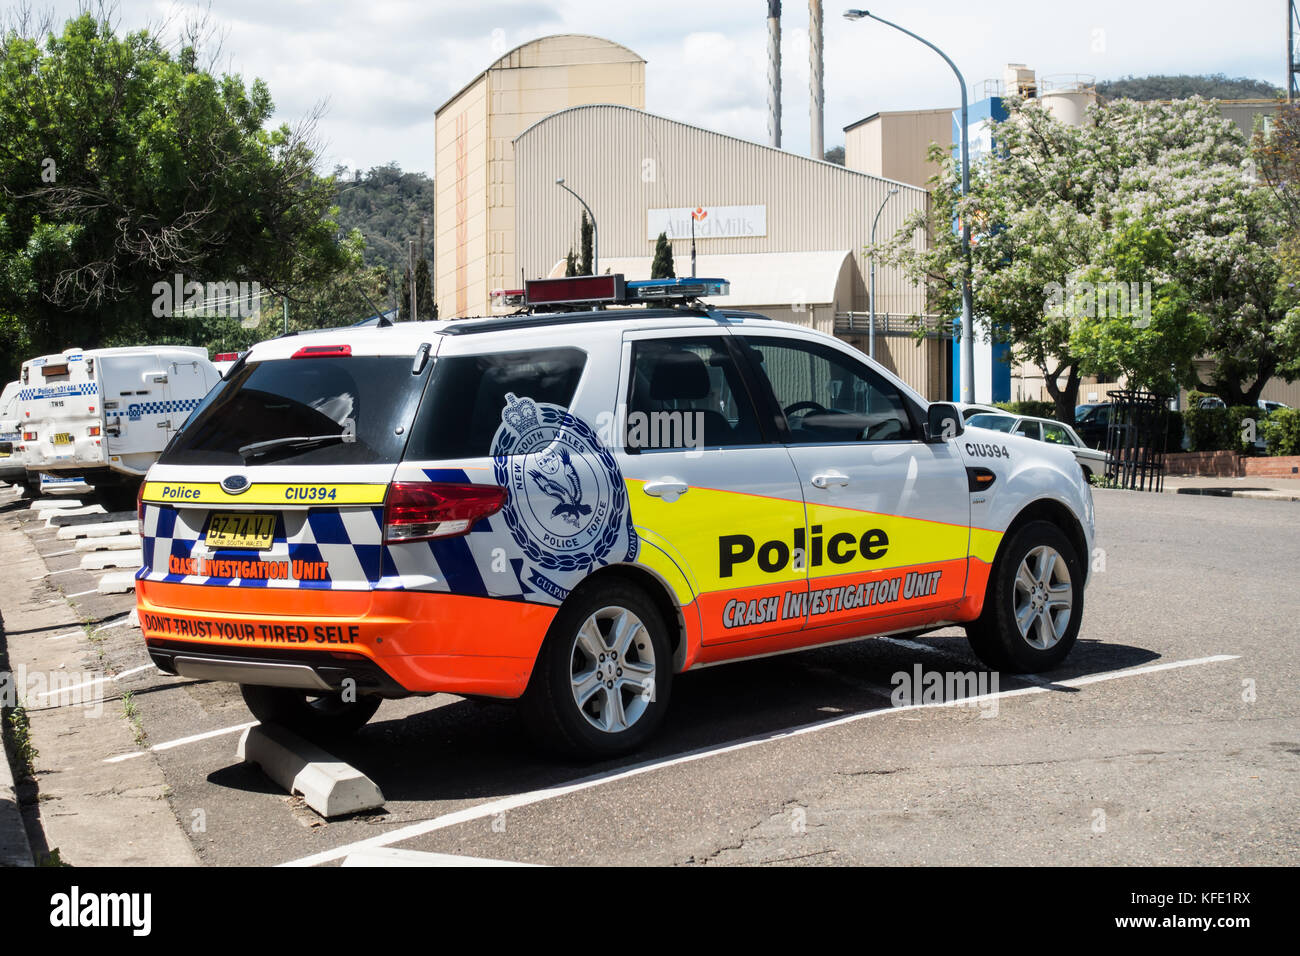 New South Wales Police Crash Investigate Unit vehicle at Tamworth Australia. Stock Photo